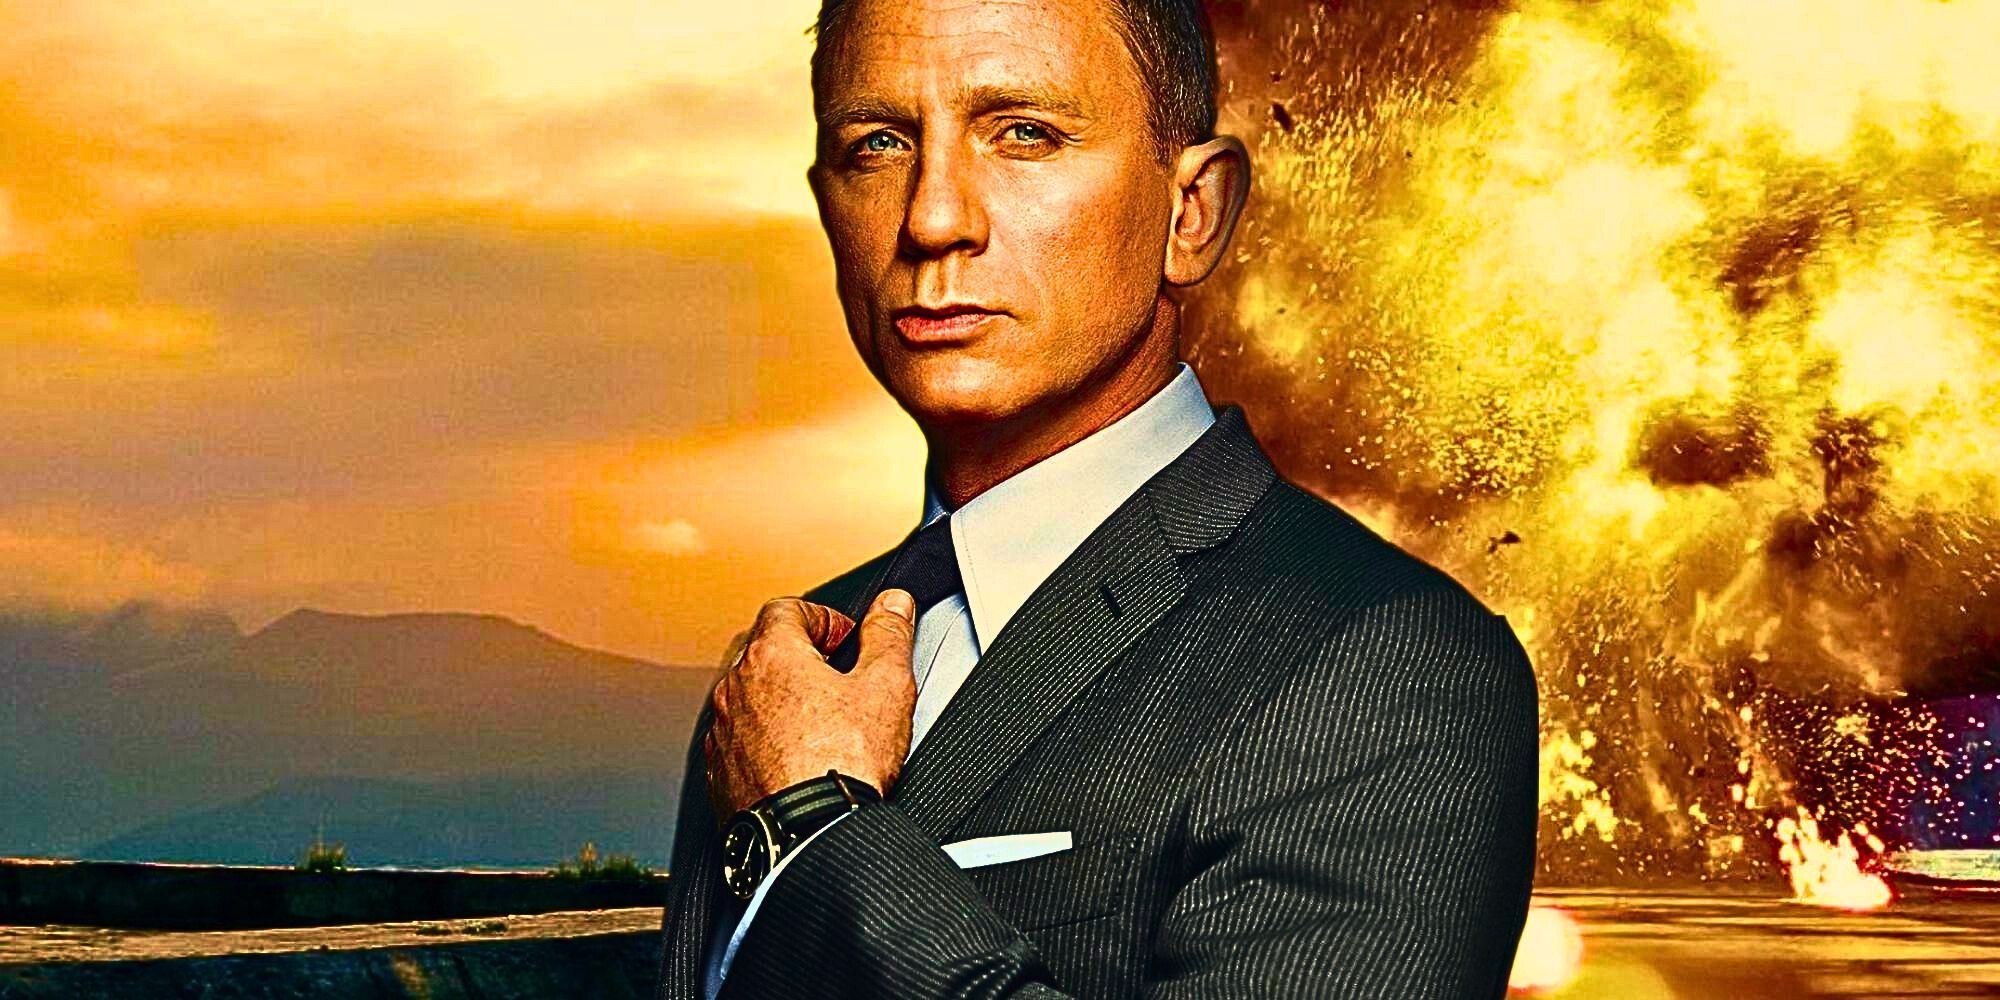 A custom image of Daniel Craig as James Bond against a backdrop of explosions